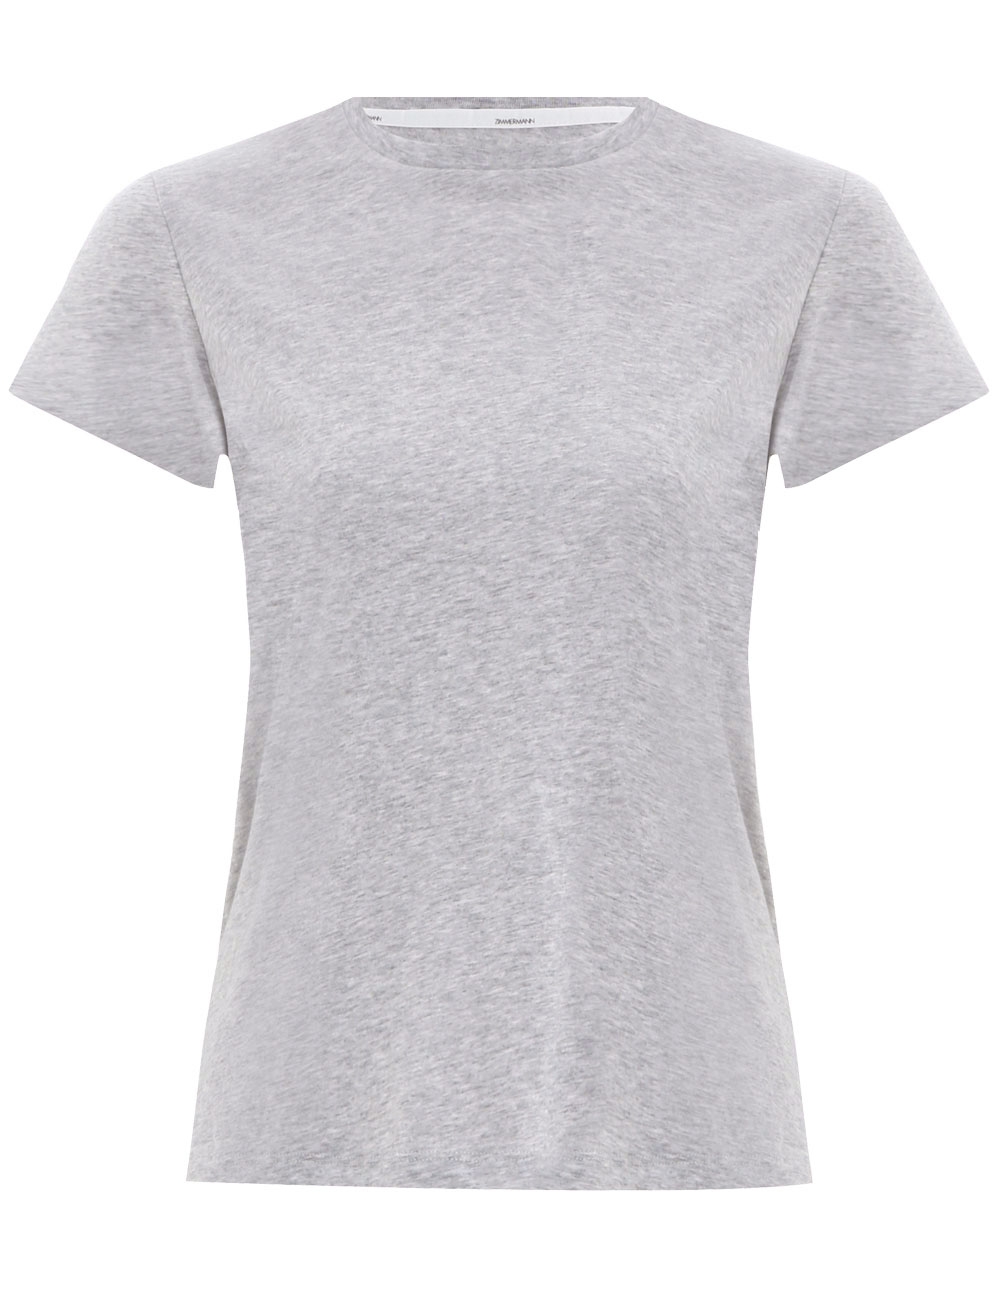 Zimmermann grey t shirt